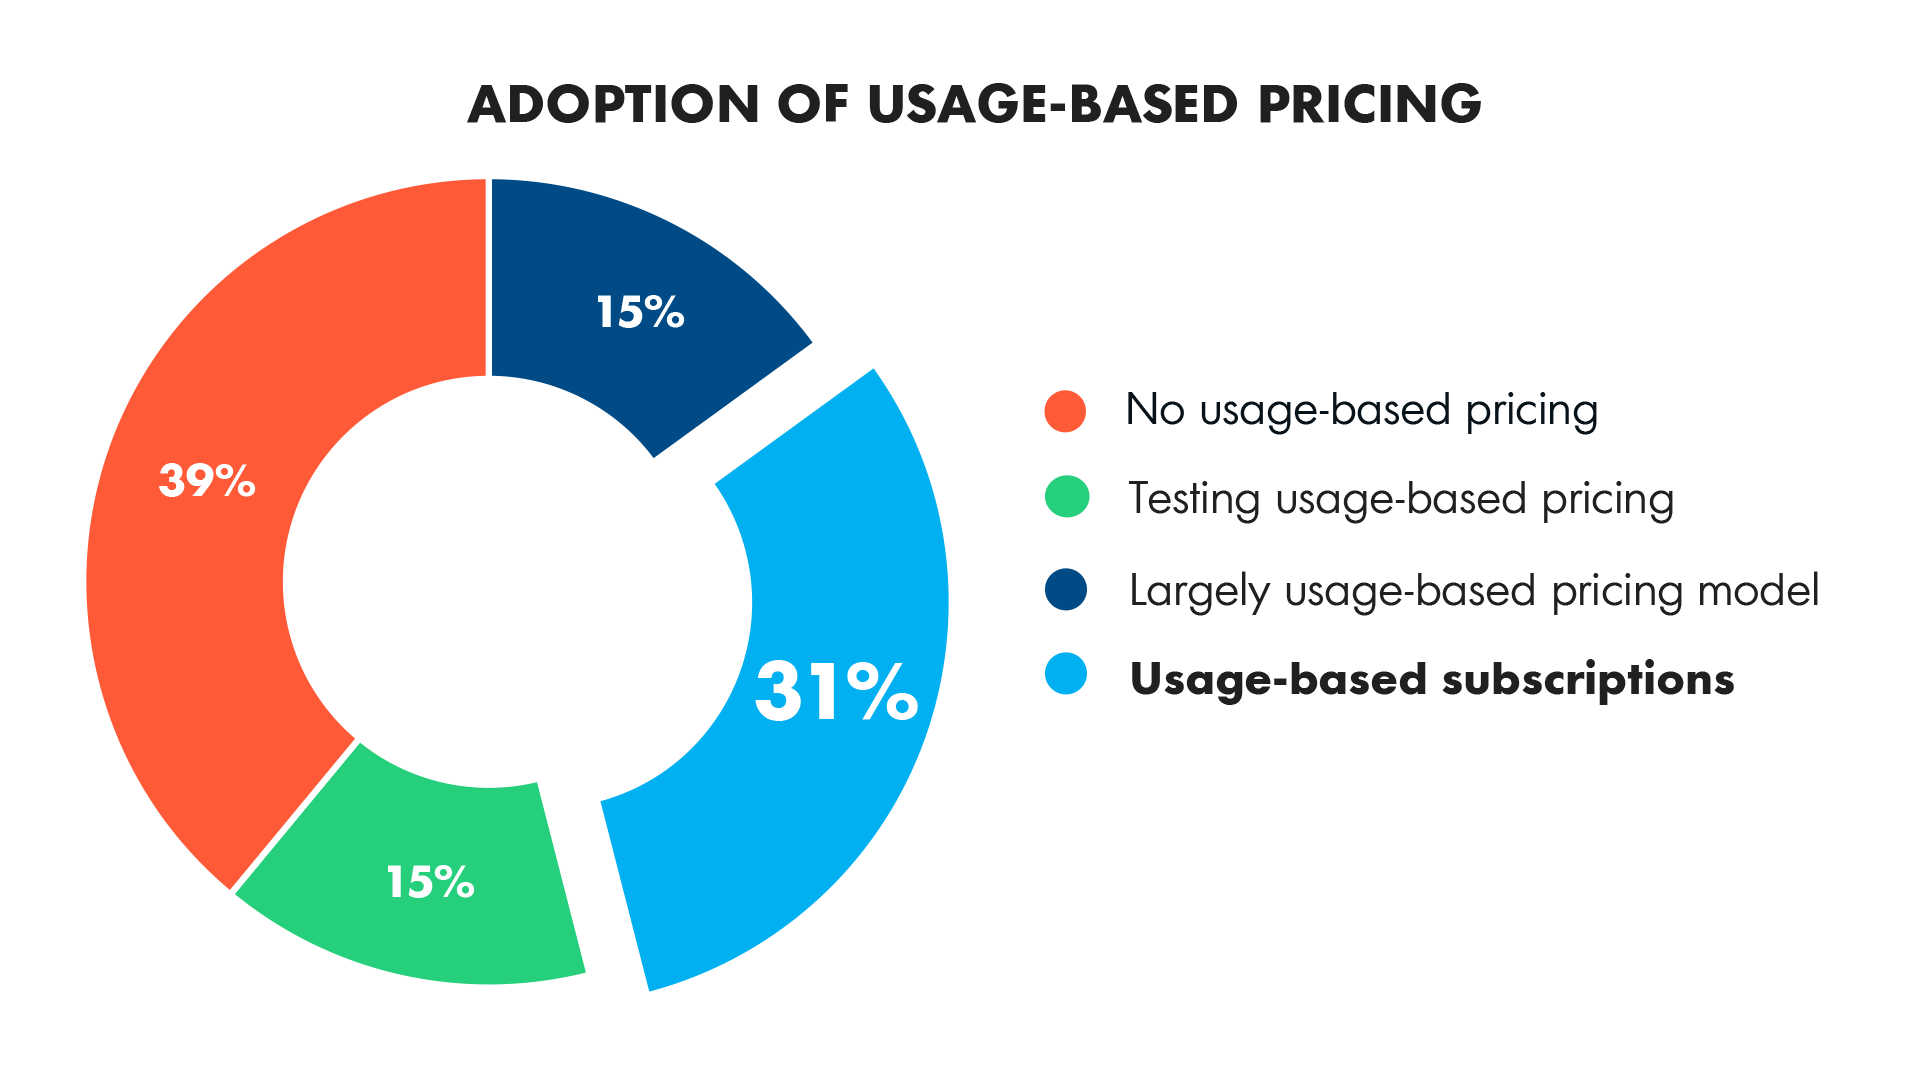 Adoption of Usage-based pricing model